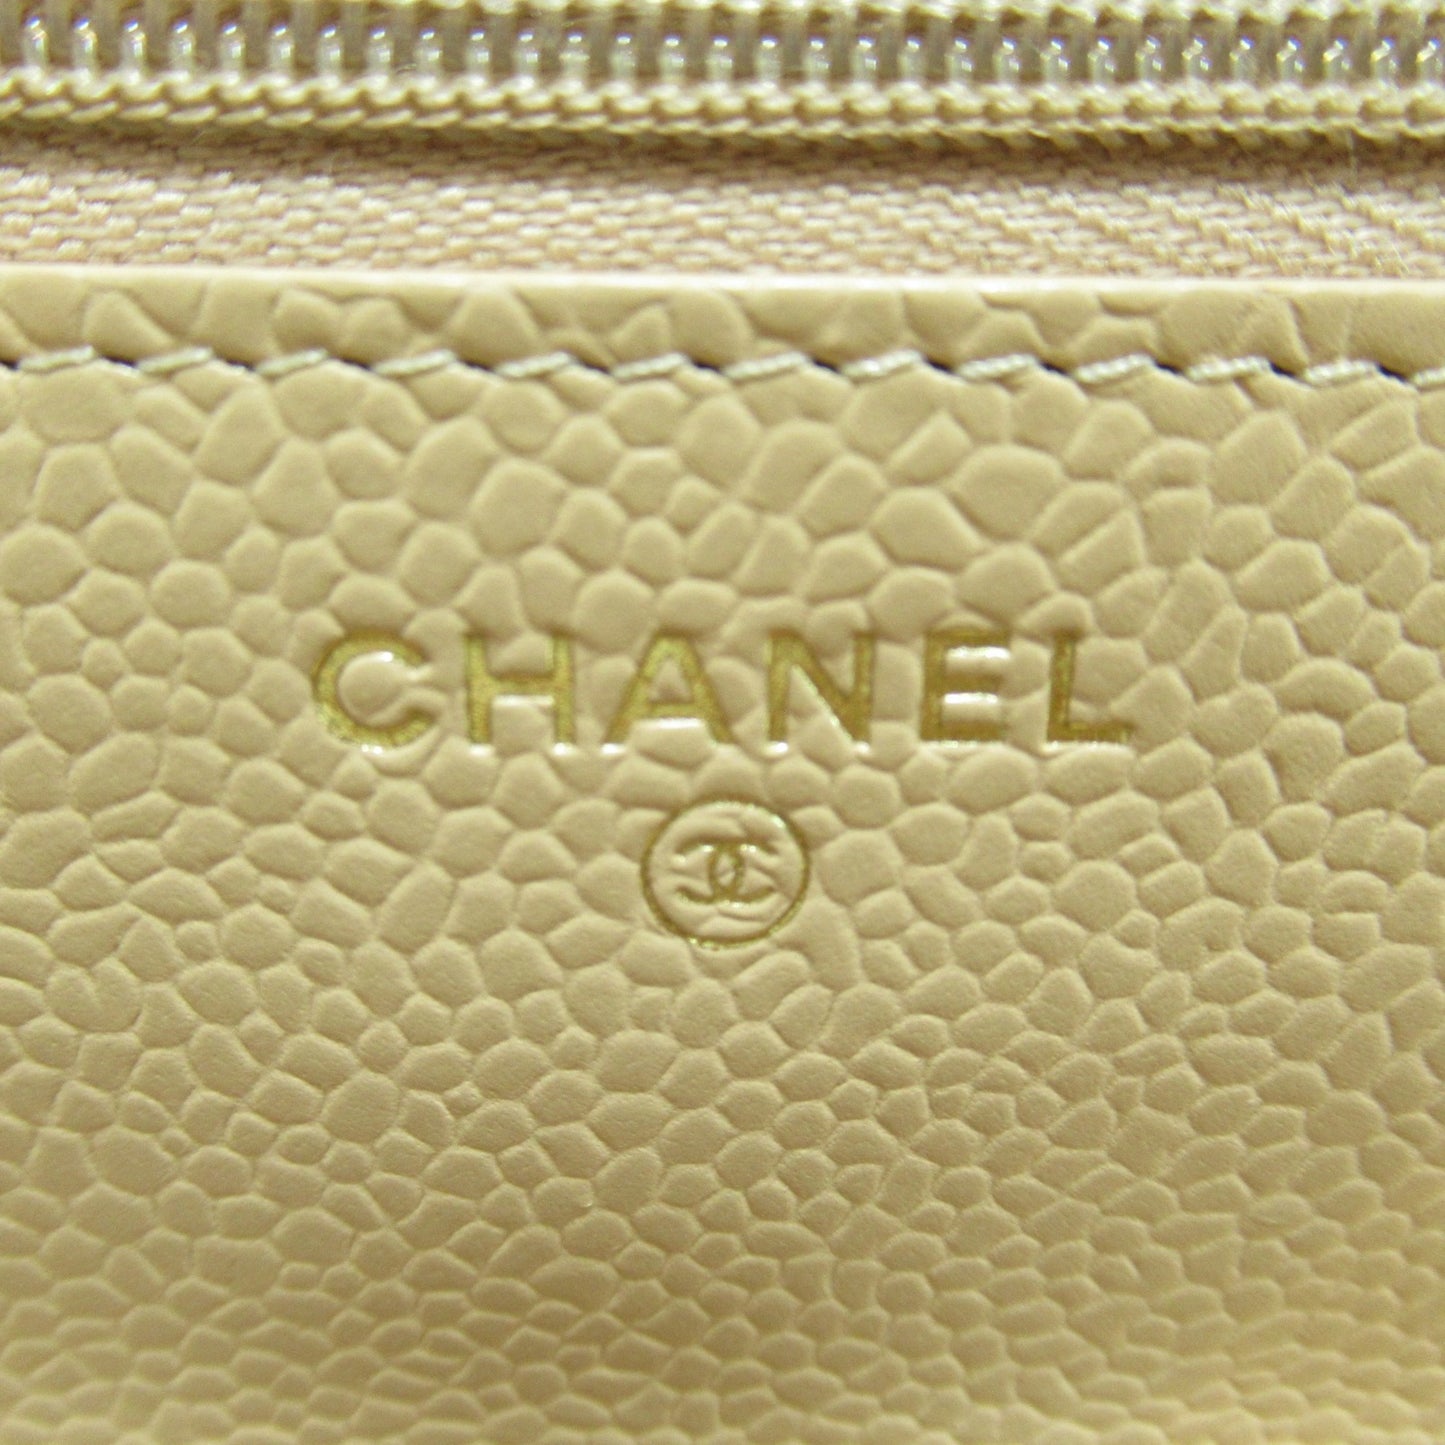 Chanel Women's Beige Leather Shoulder Bag in Beige